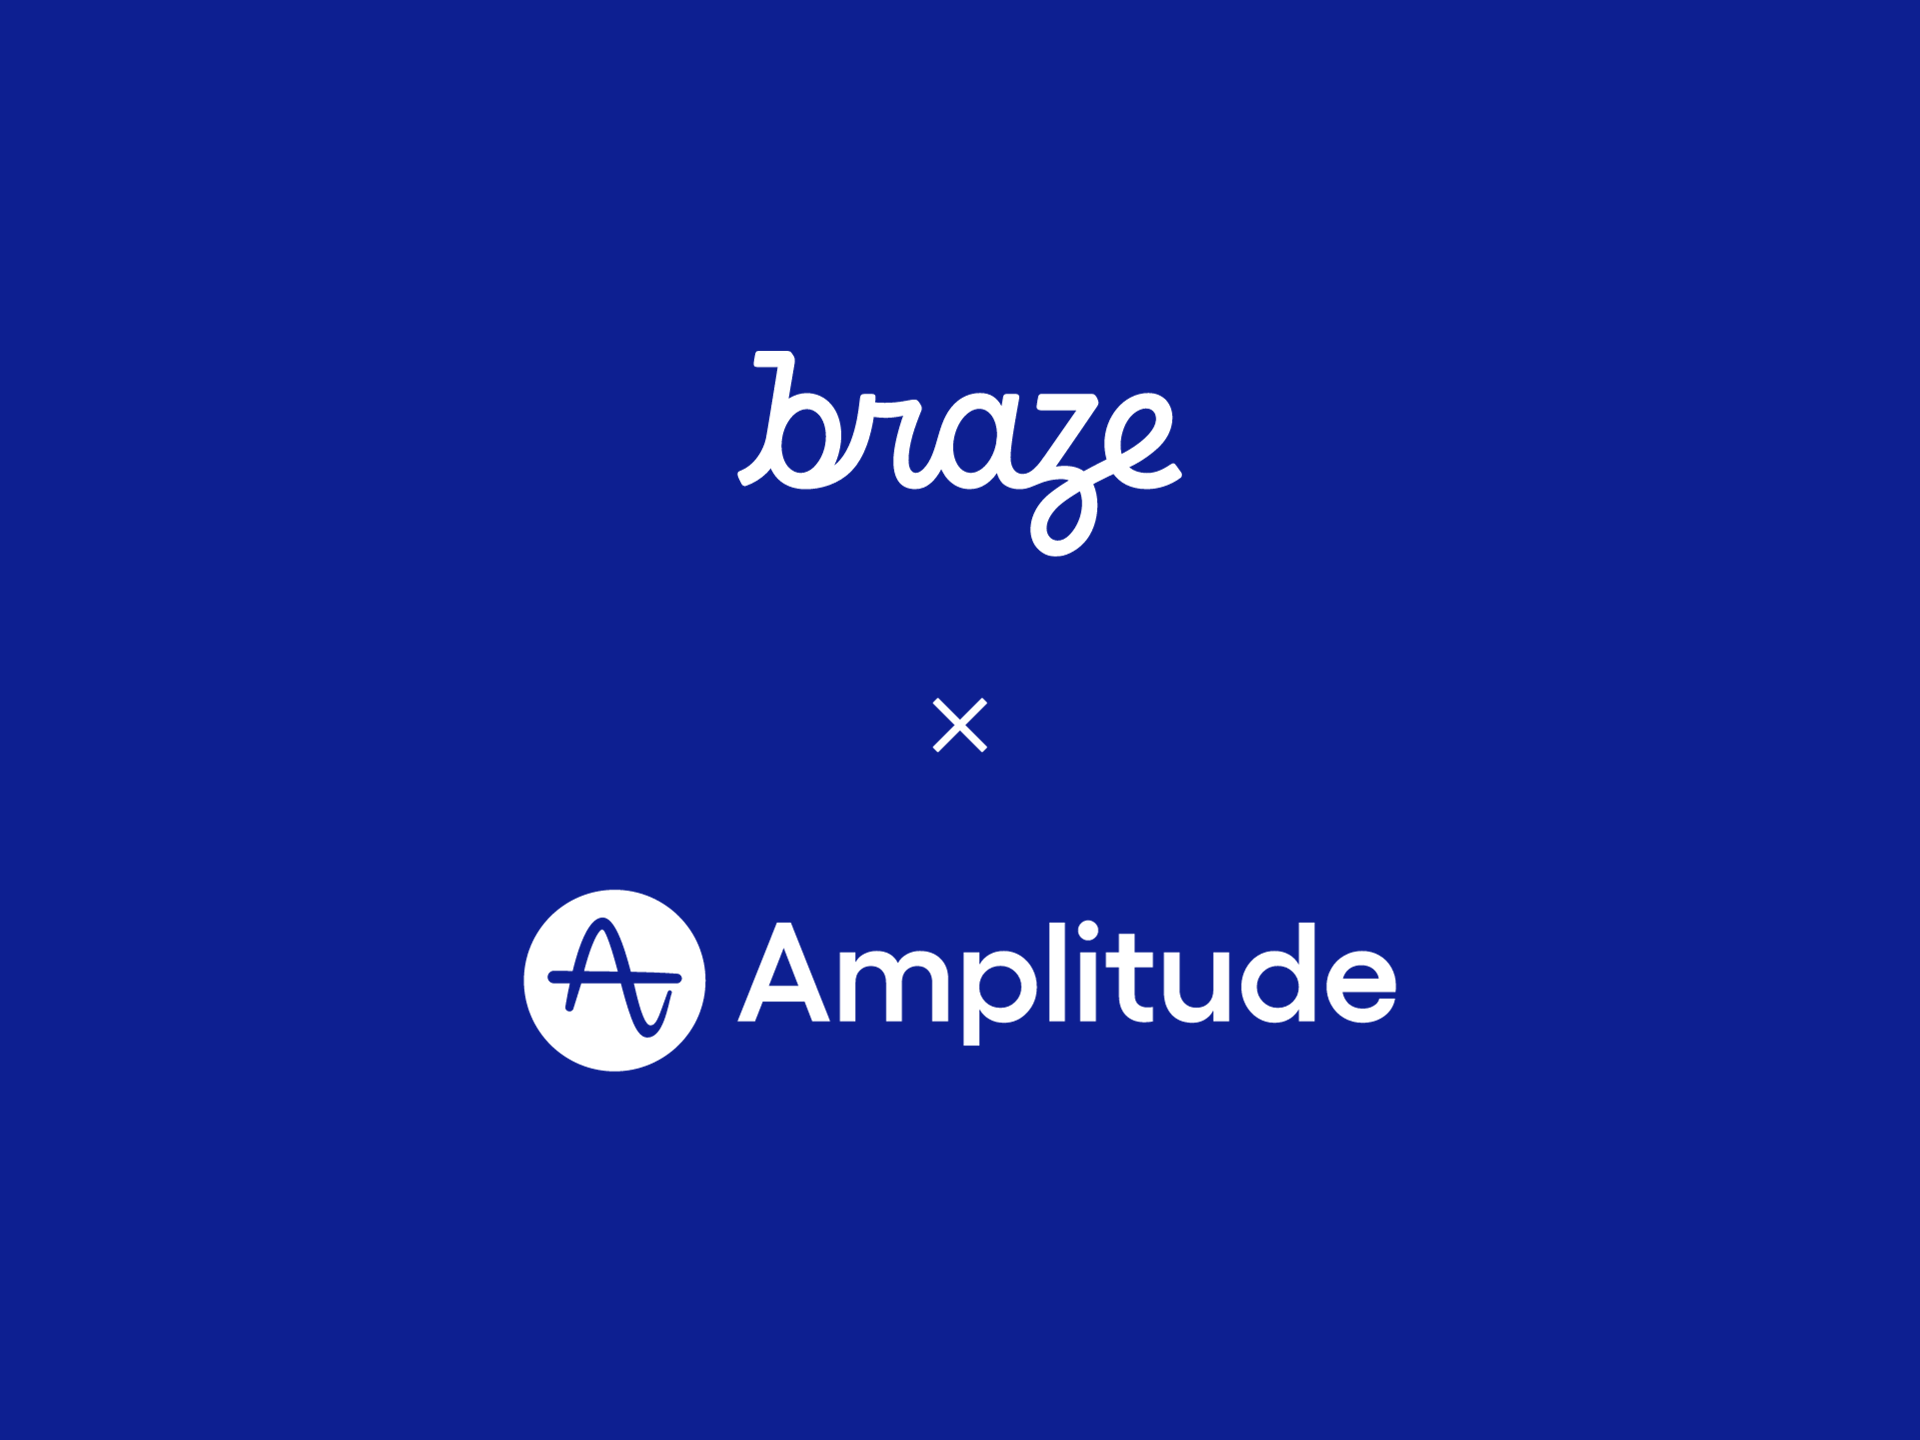 Braze and Amplitude logos